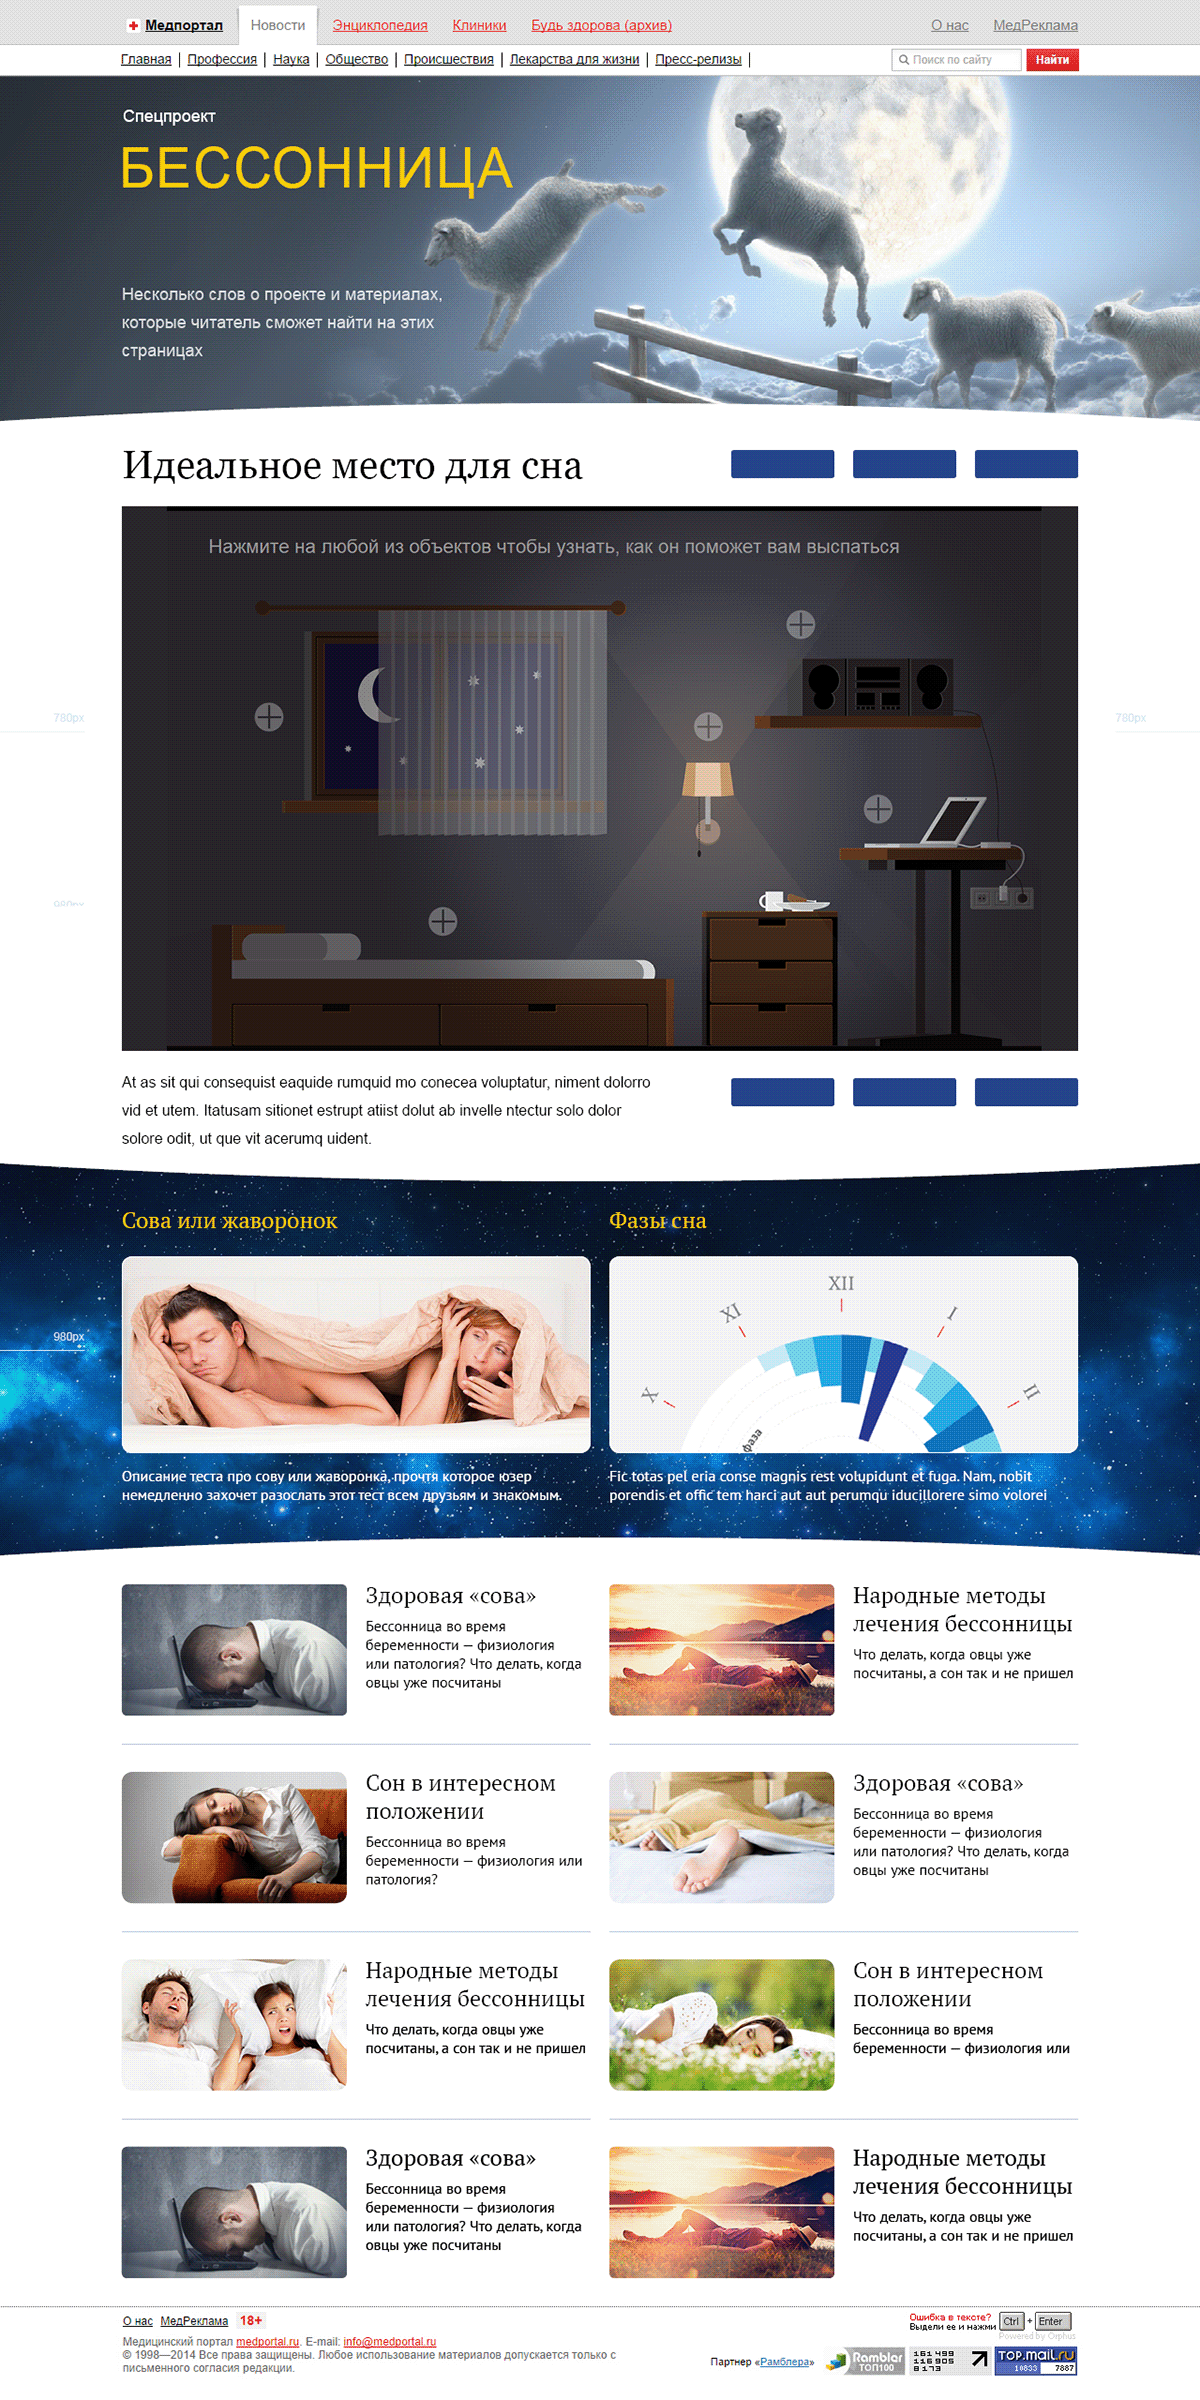 Website infographic medicine sleep